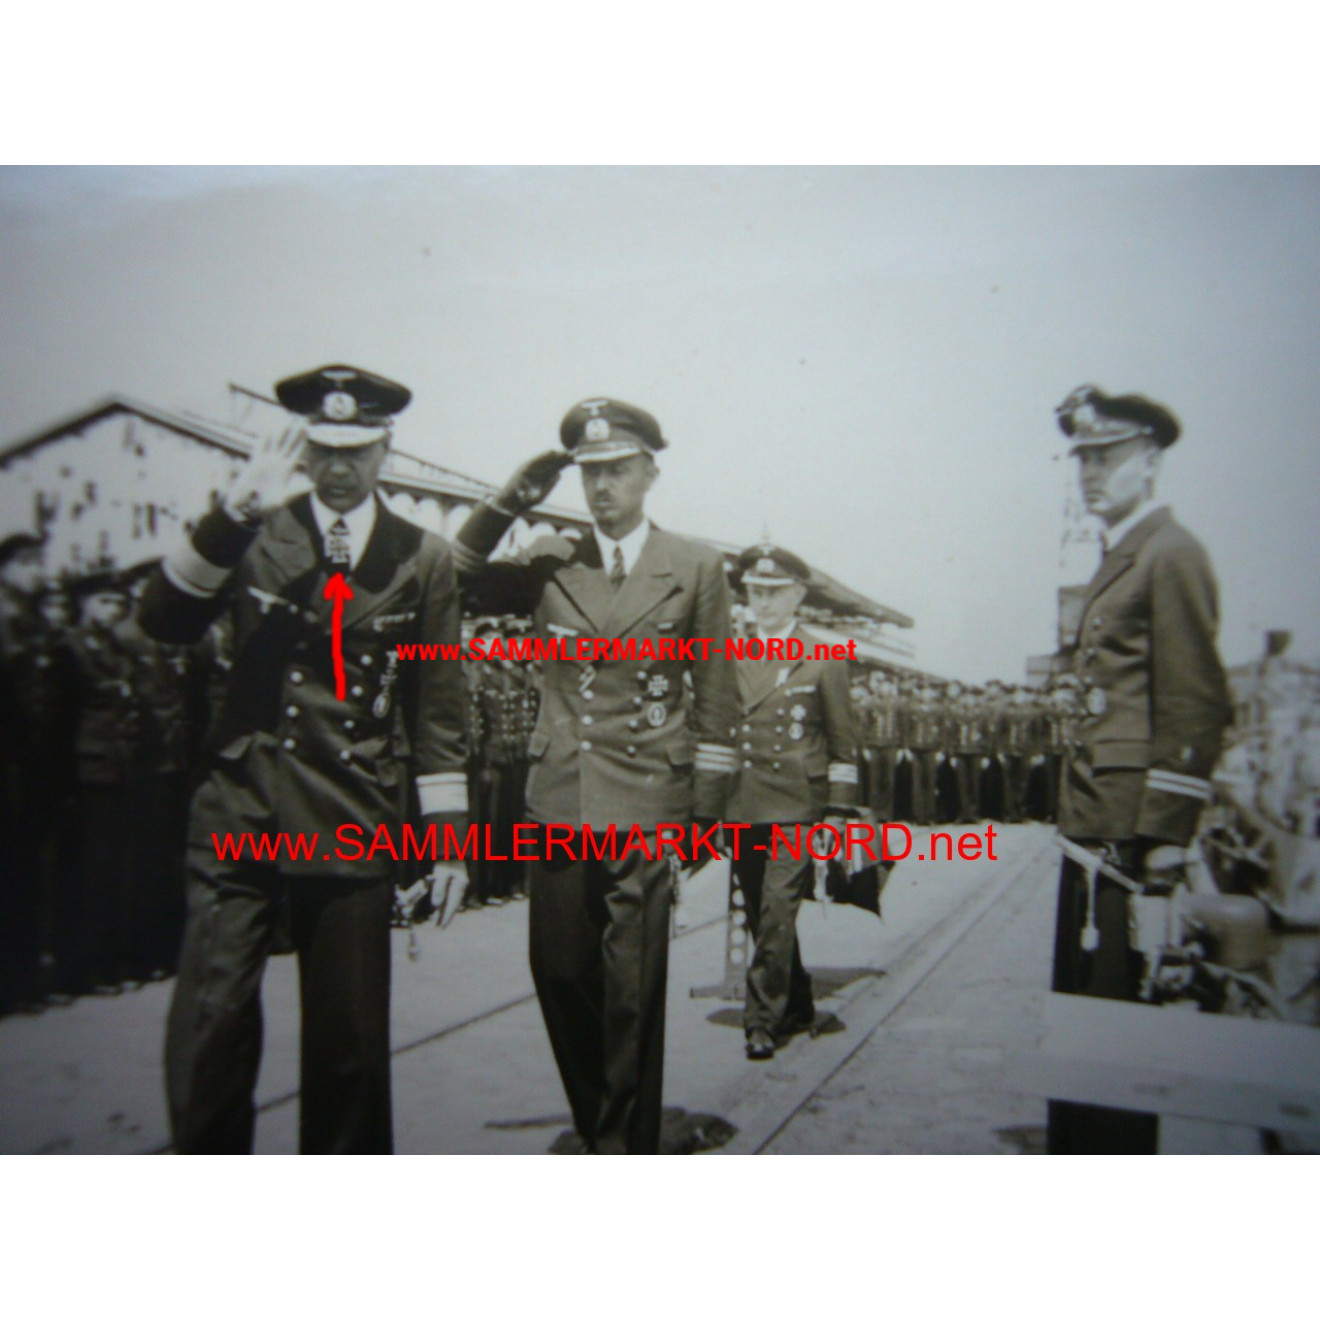 Kriegsmarine Admiral THEODOR KRANCKE with knight's cross